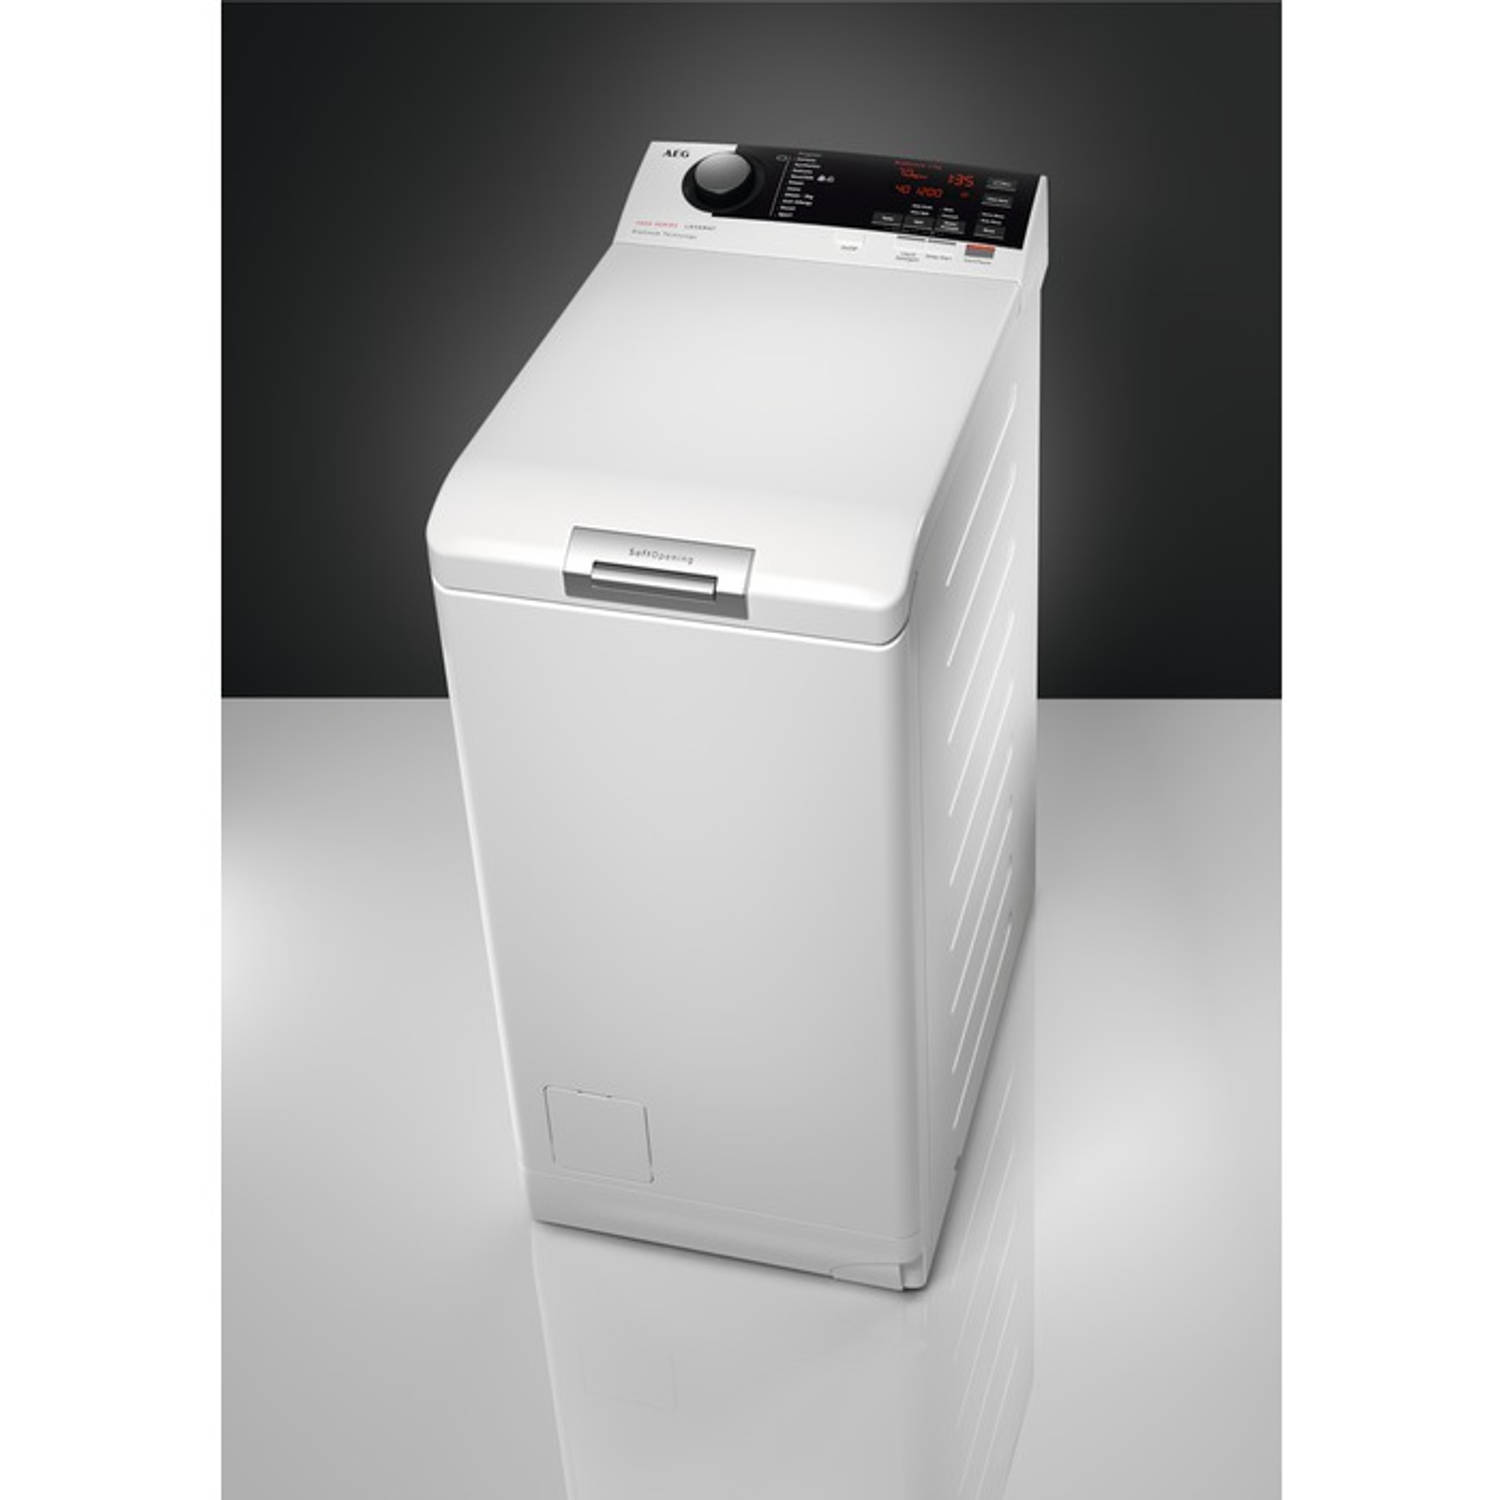 Om toestemming te geven Harden Geplooid AEG L7TBN73E 7000 serie ProSteam wasmachine bovenlader | Blokker